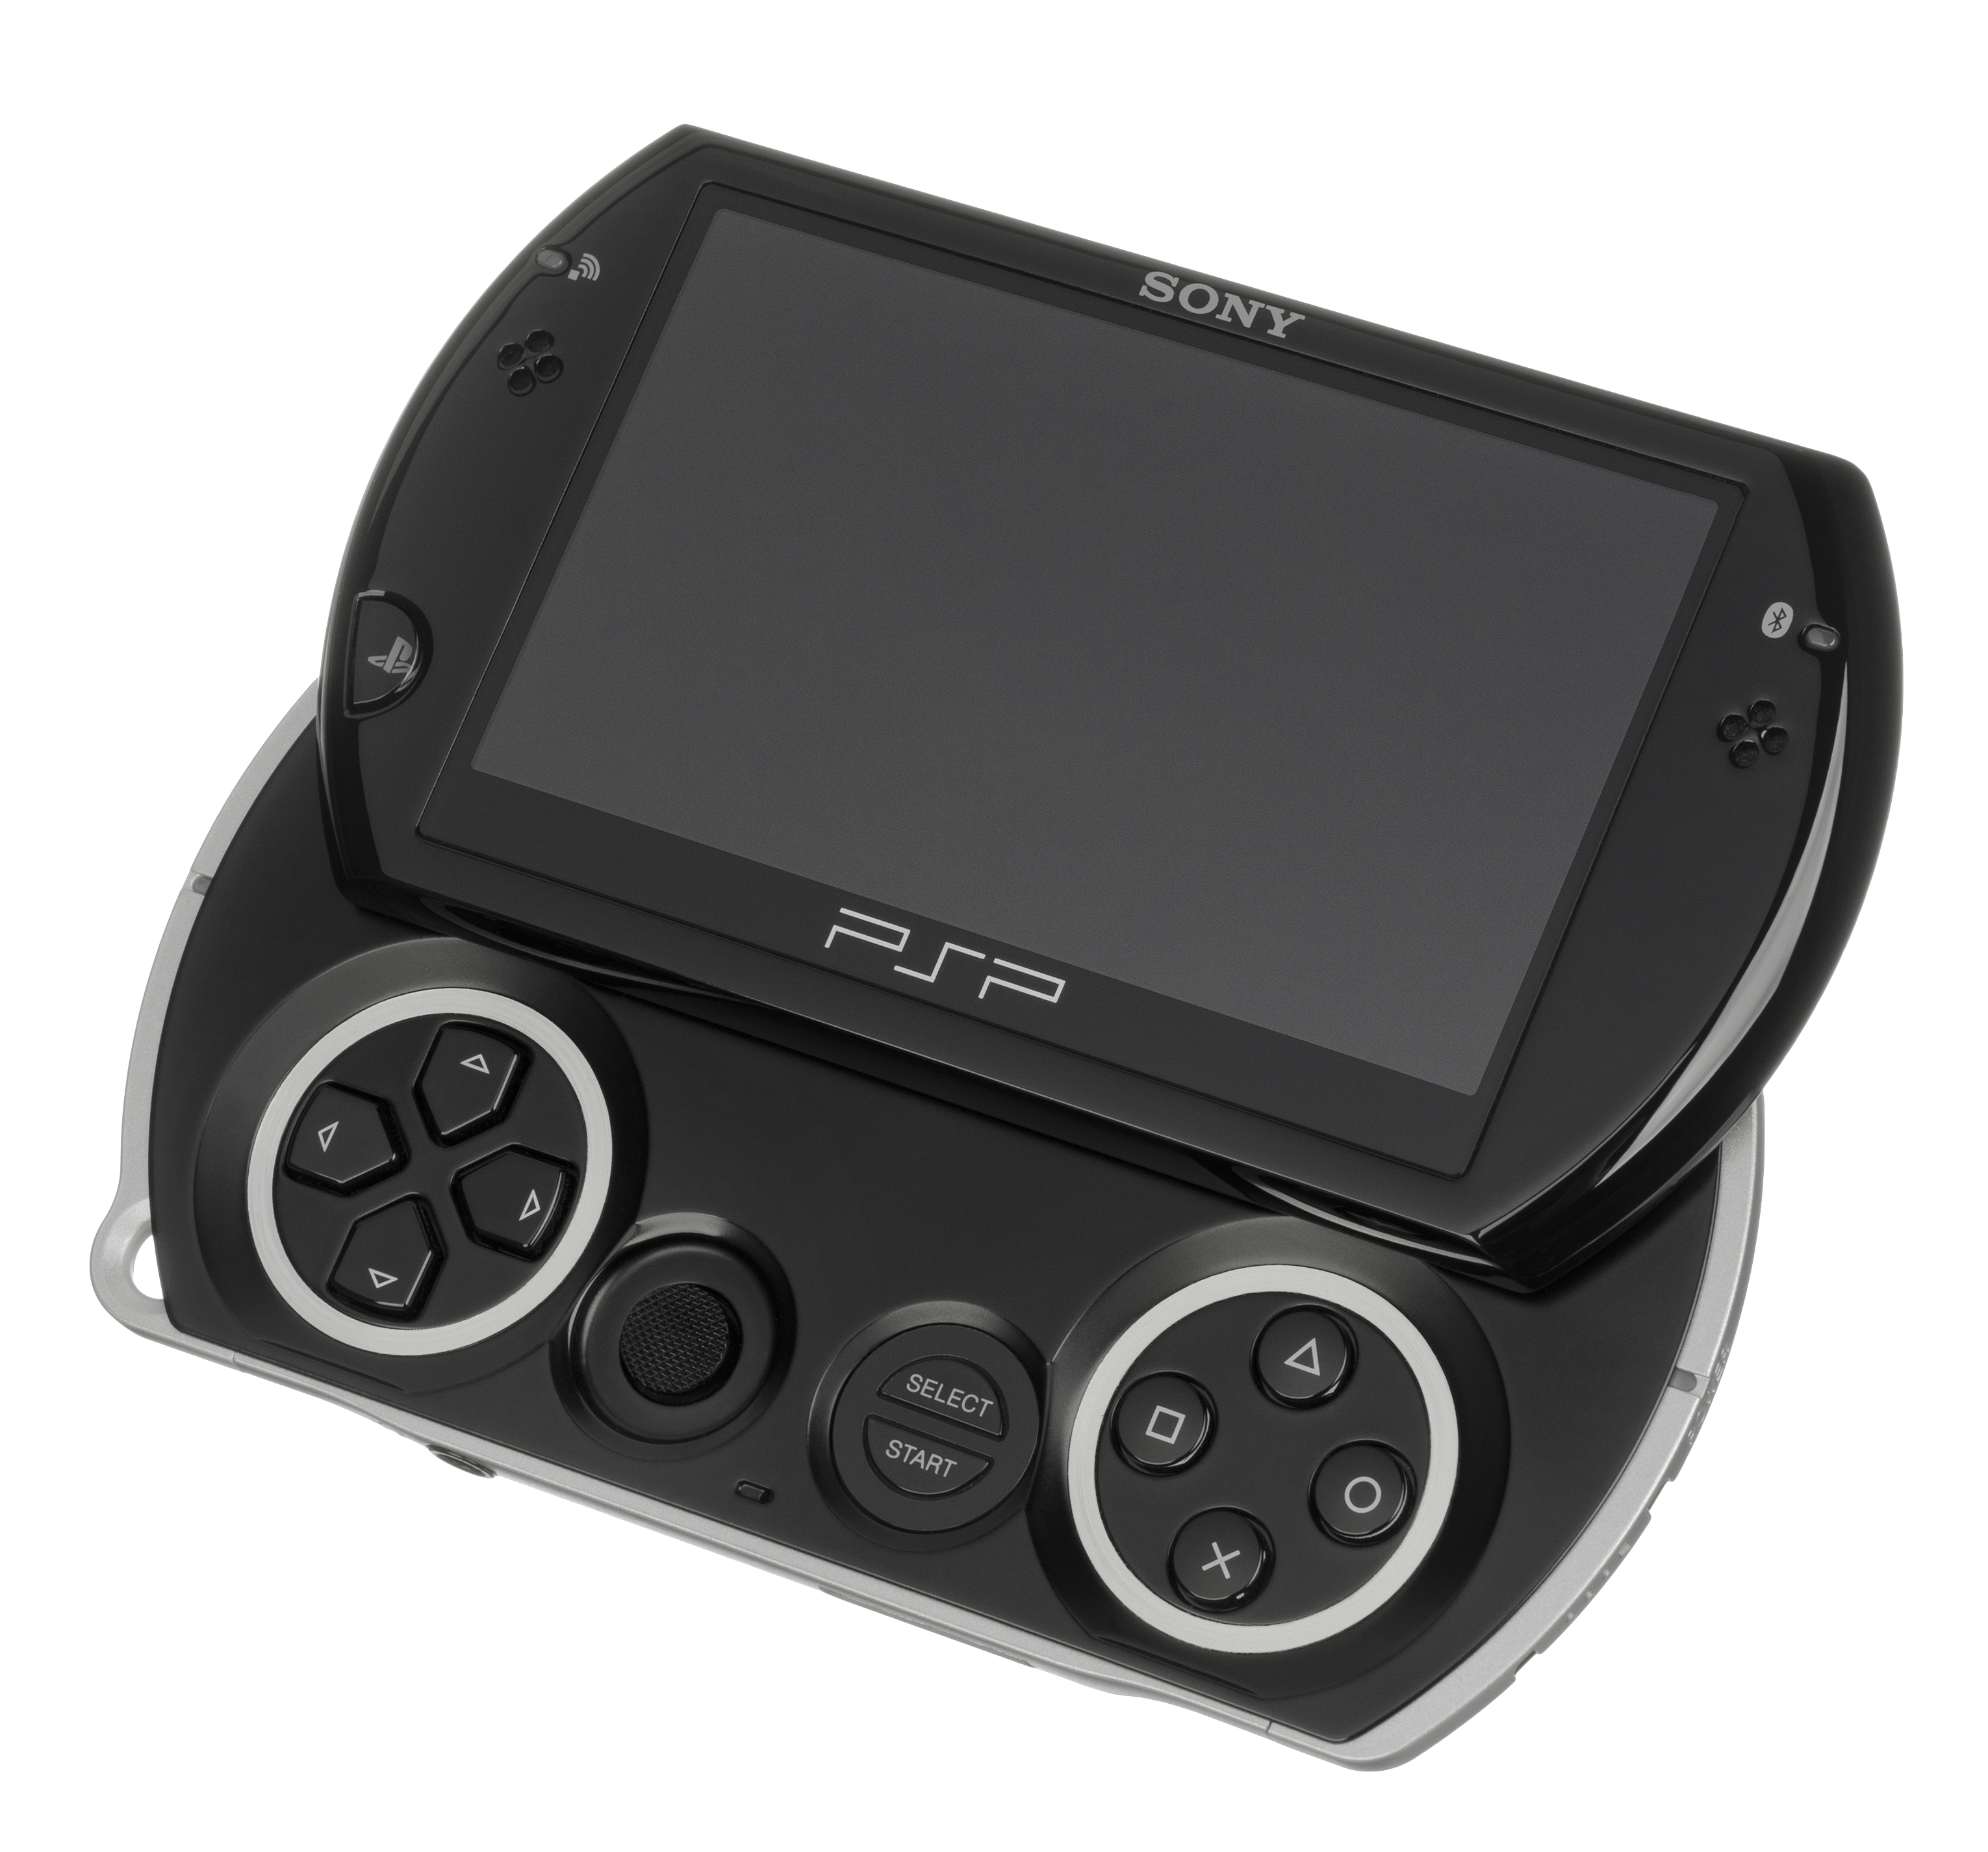 PlayStation Portable go - Wikipedia